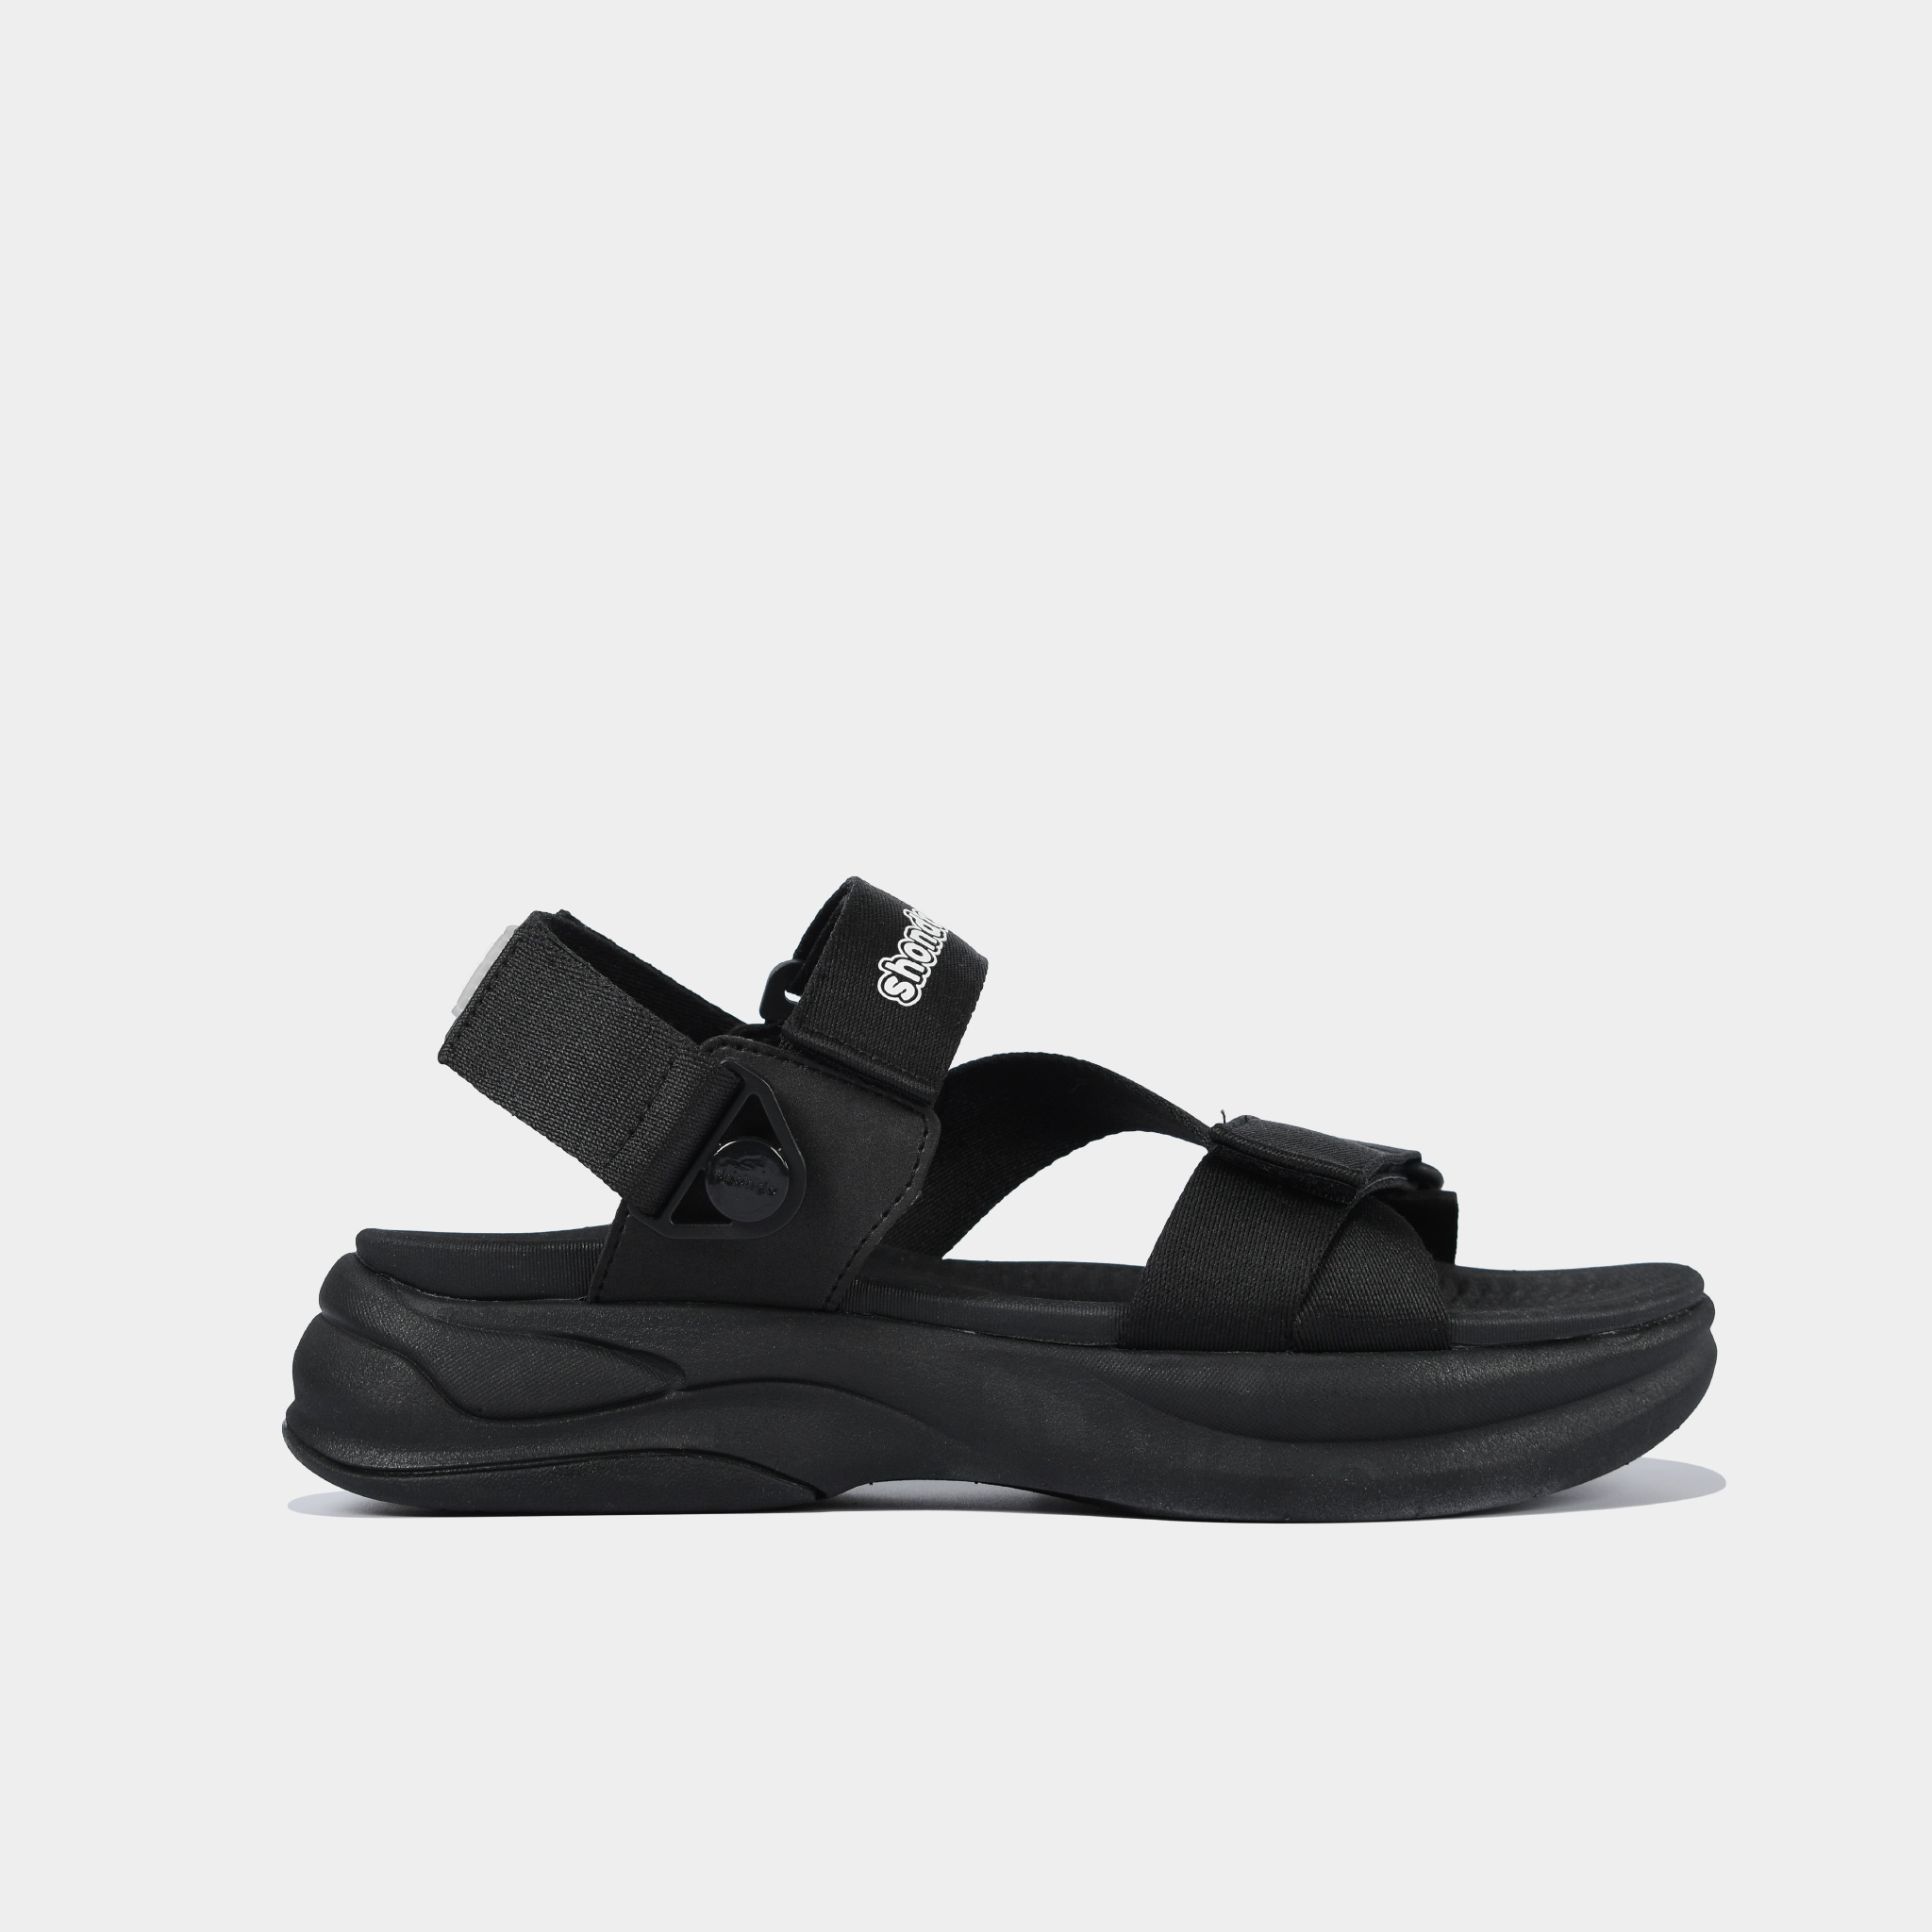 [TẶNG DÉP] Sandals F8B full đen